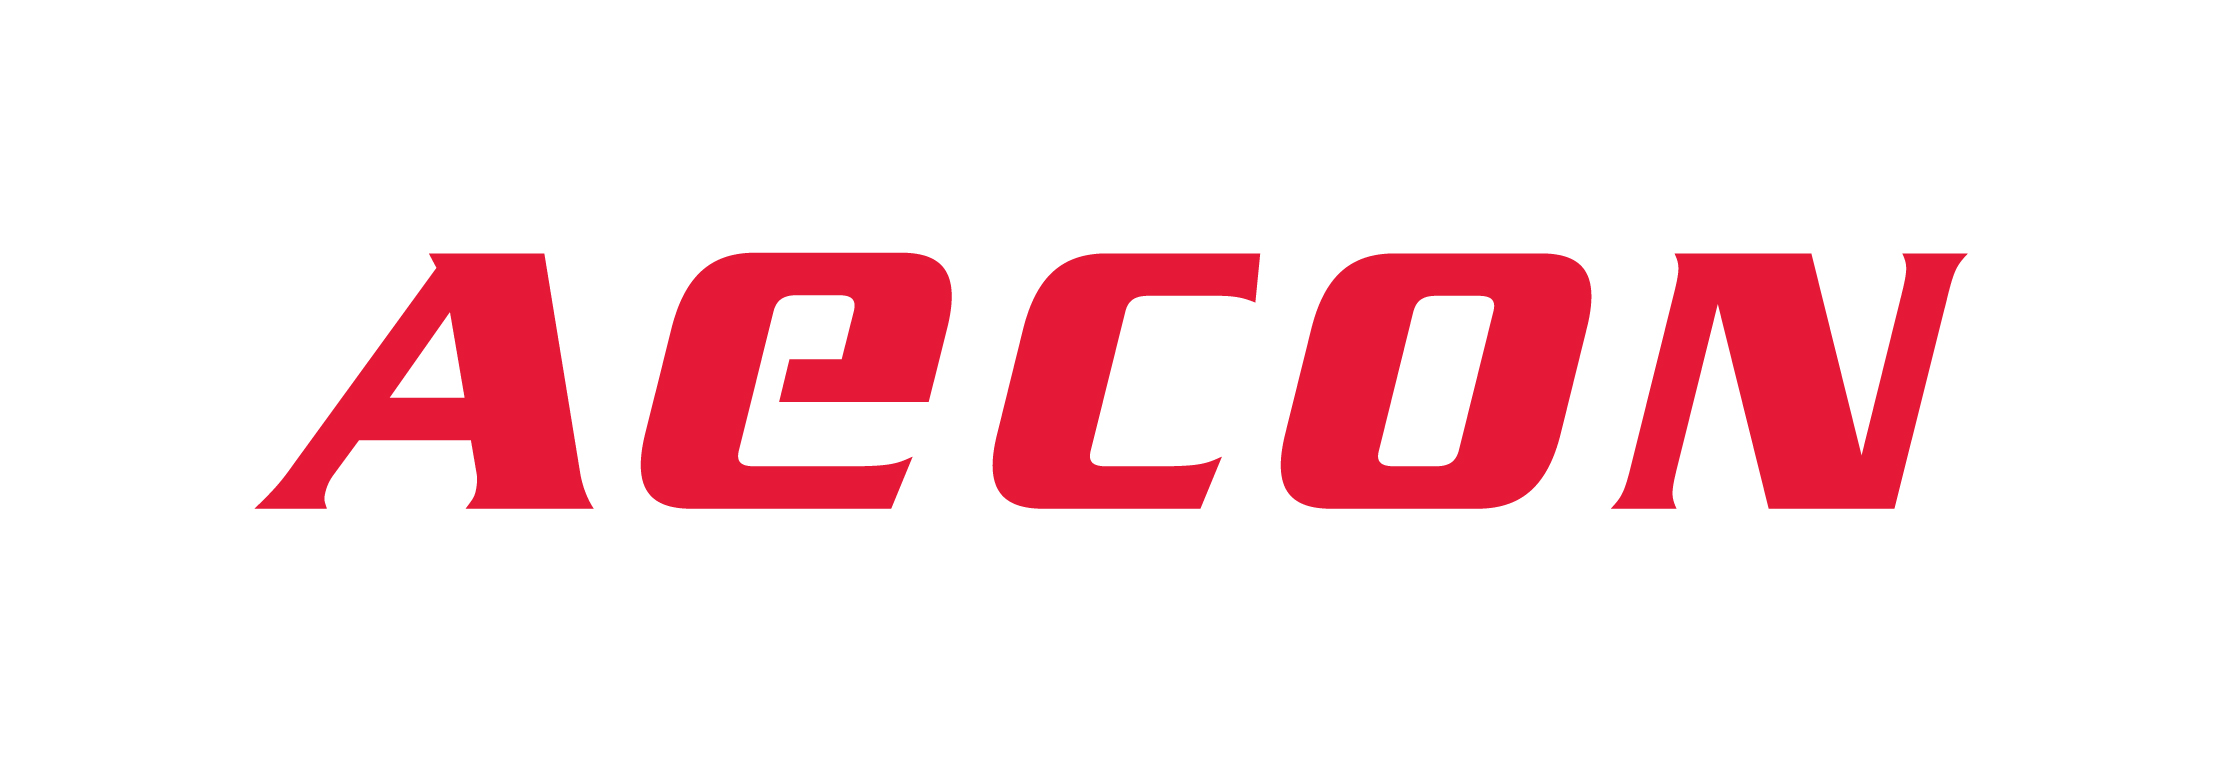 Aecon-Red-Logo-Jpg